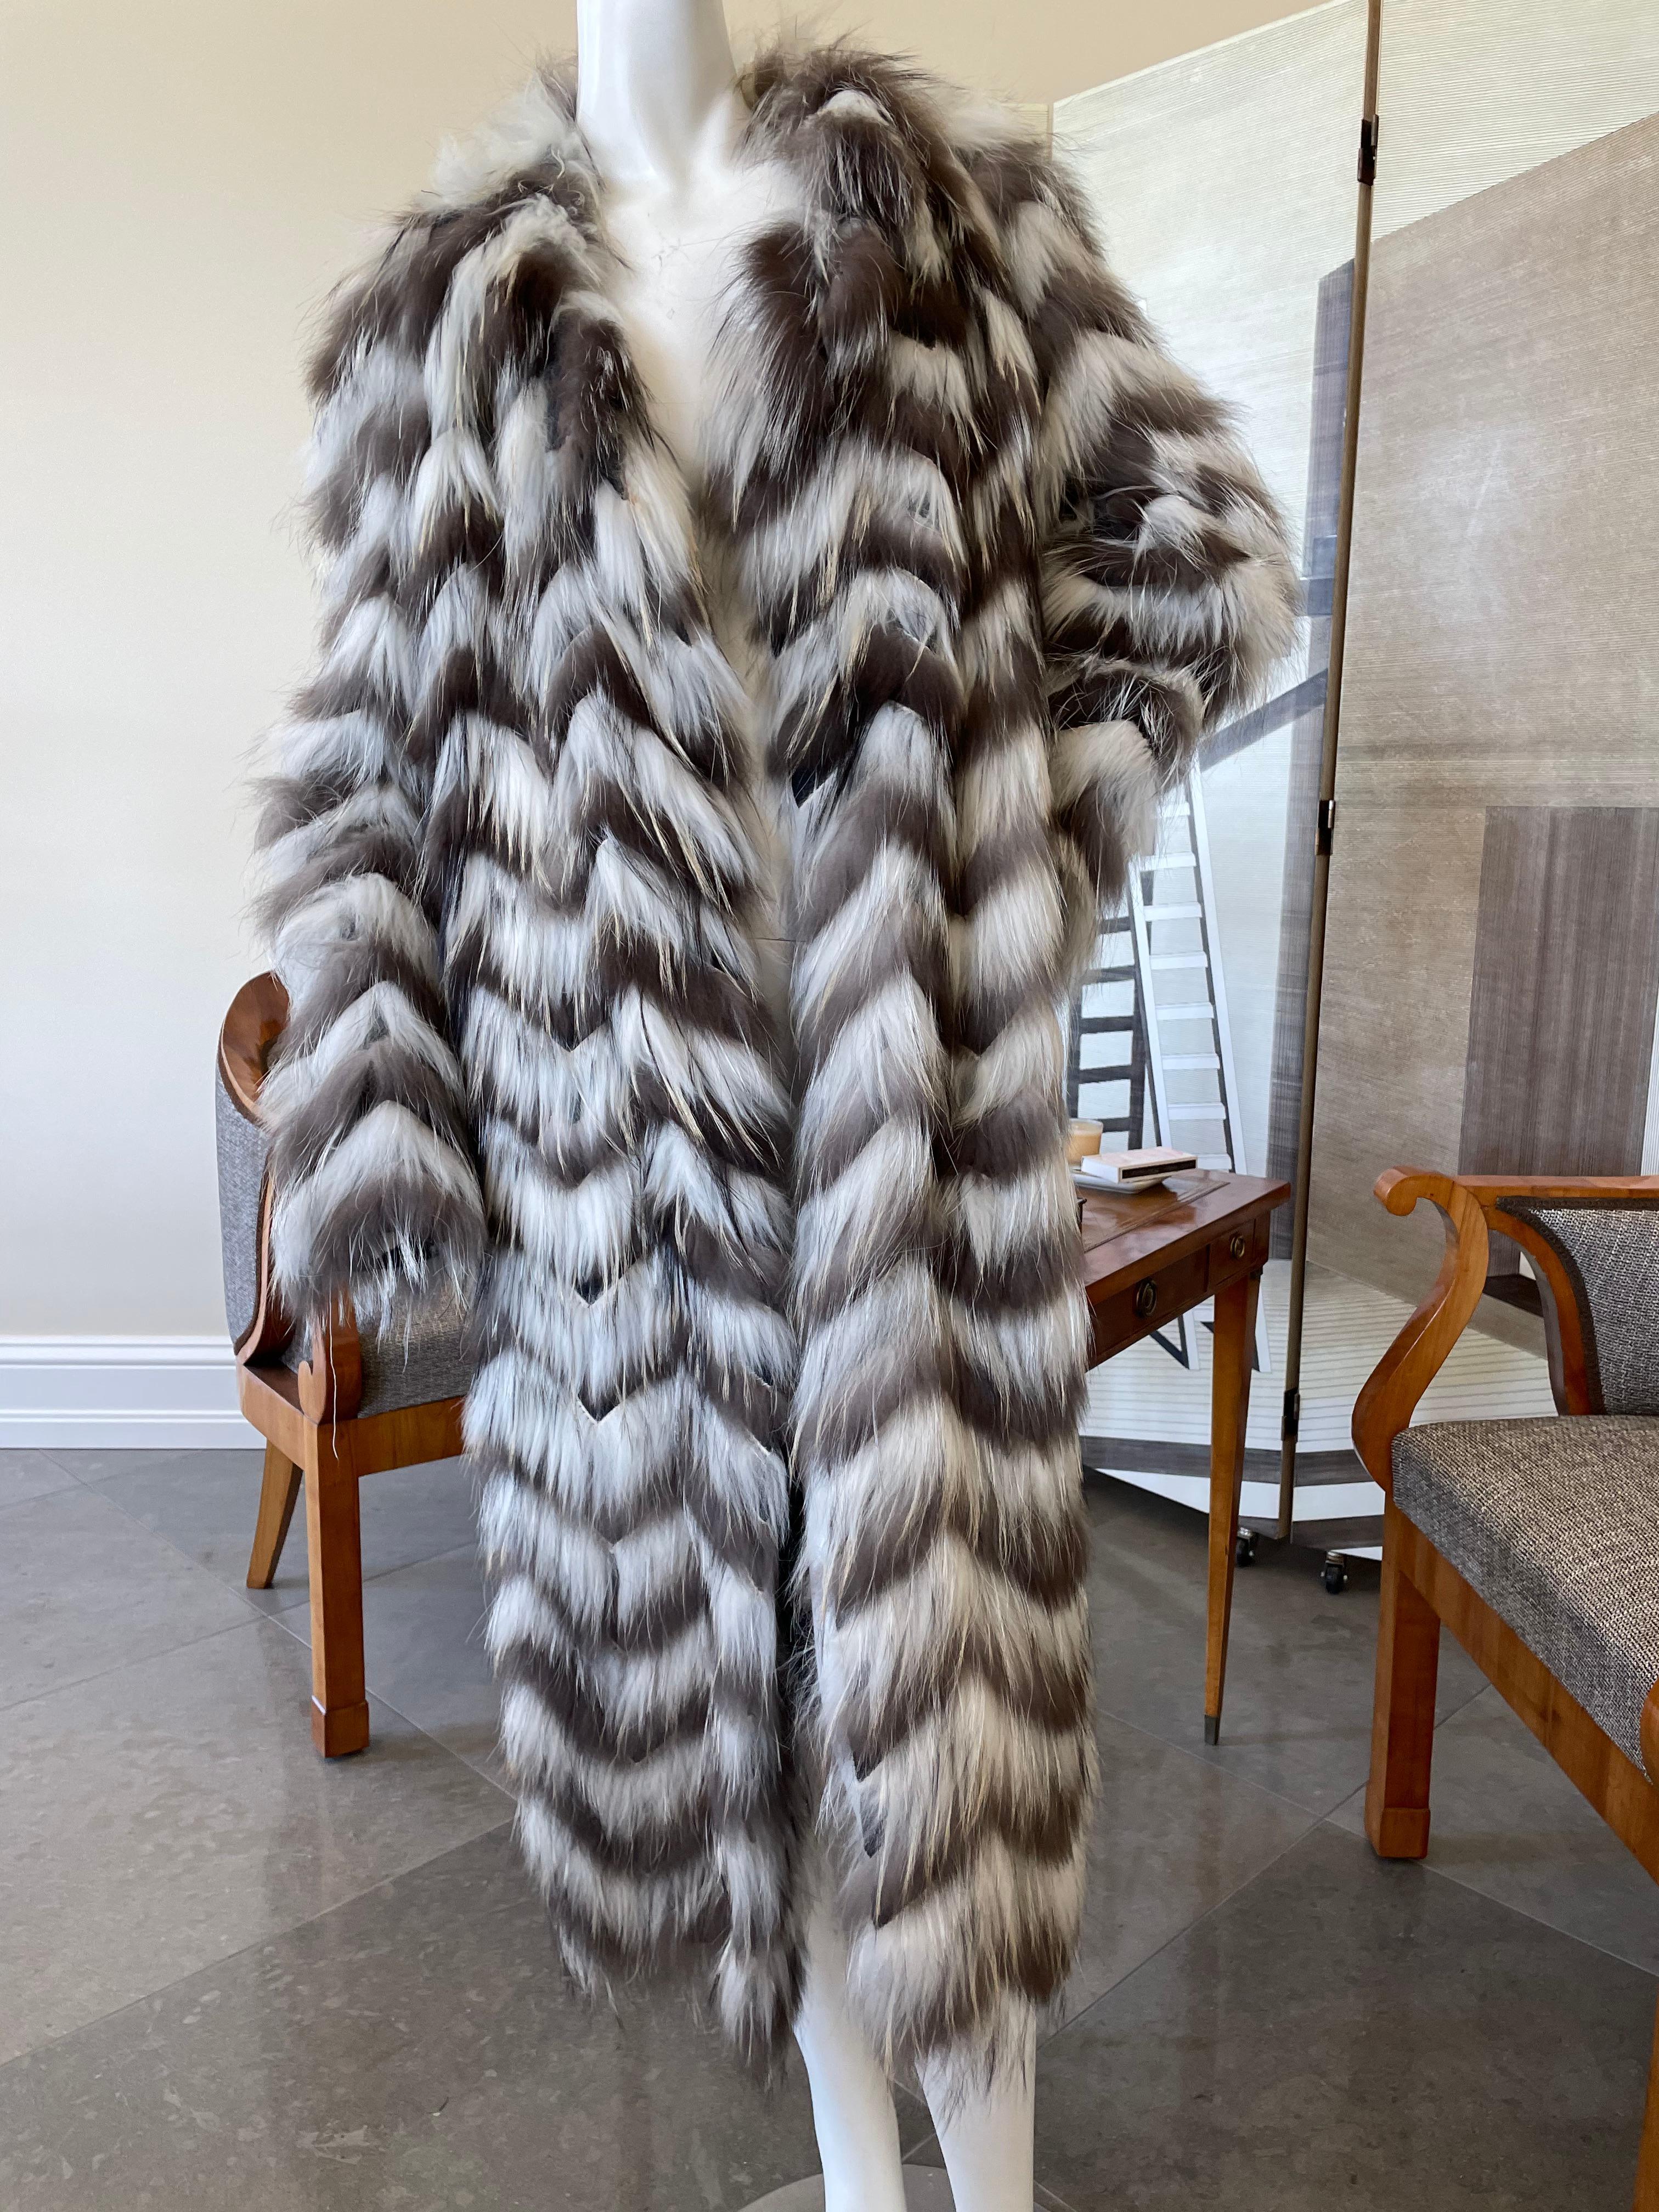 Lanvin Chevron Pattern Lightweight Feathered Fox Fur Coat 
Very lightweight, lined in wool.
Size 40
Bust  44